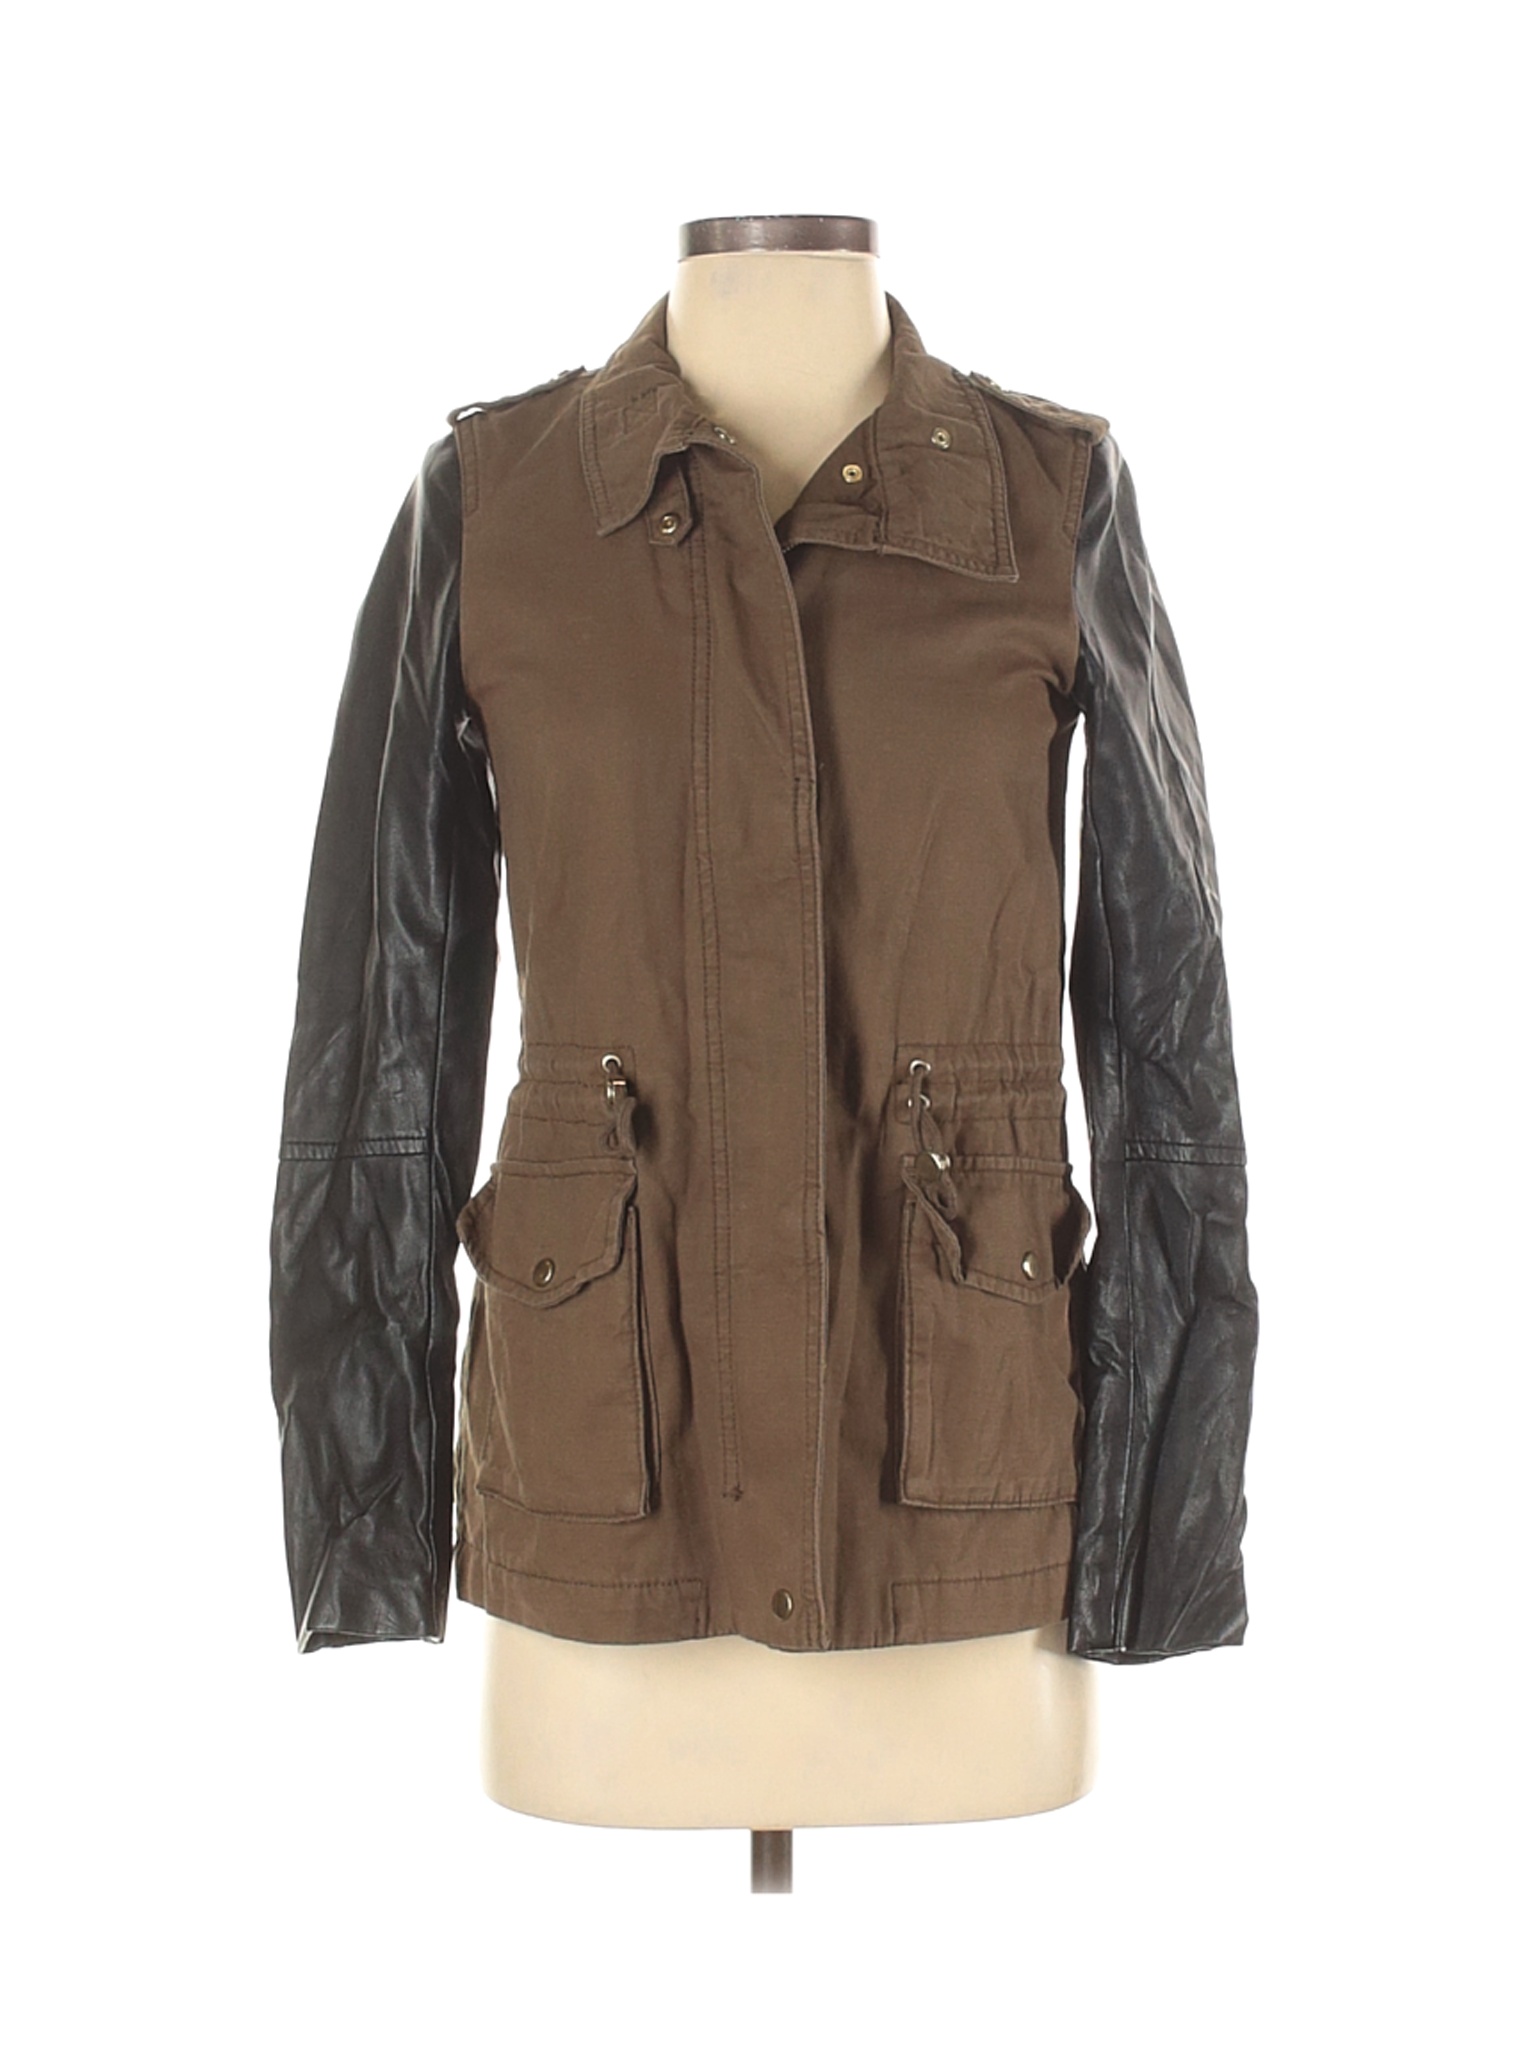 H&M Women Brown Jacket 2 | eBay